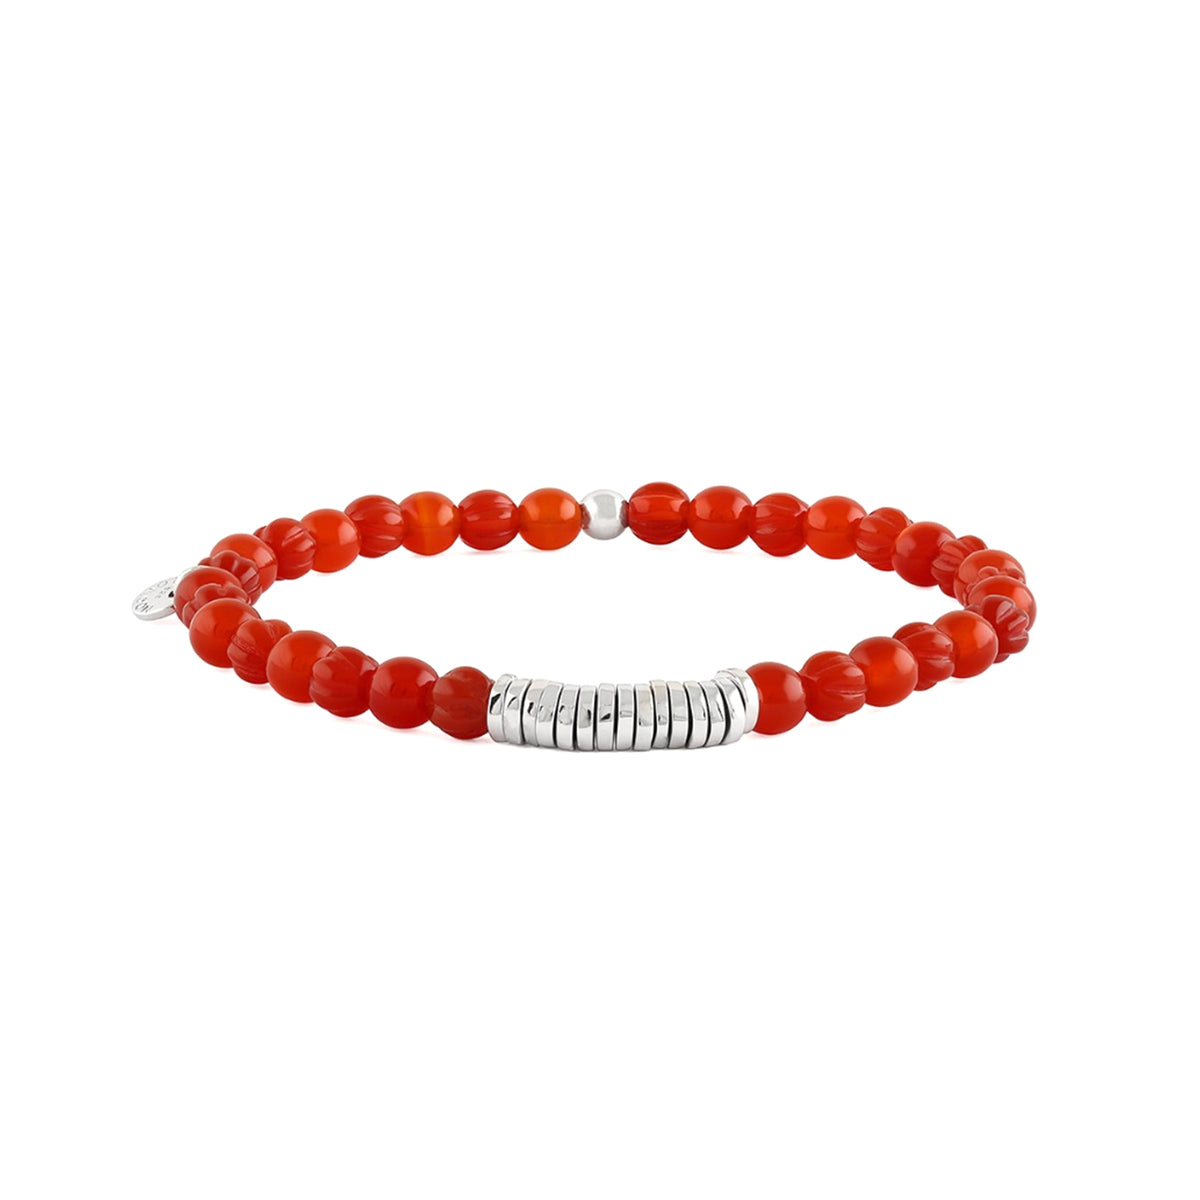 Red Carnelian Beaded Bracelet with Silver Spacer Discs-Bracelets-Tateossian-Cufflinks.com.sg